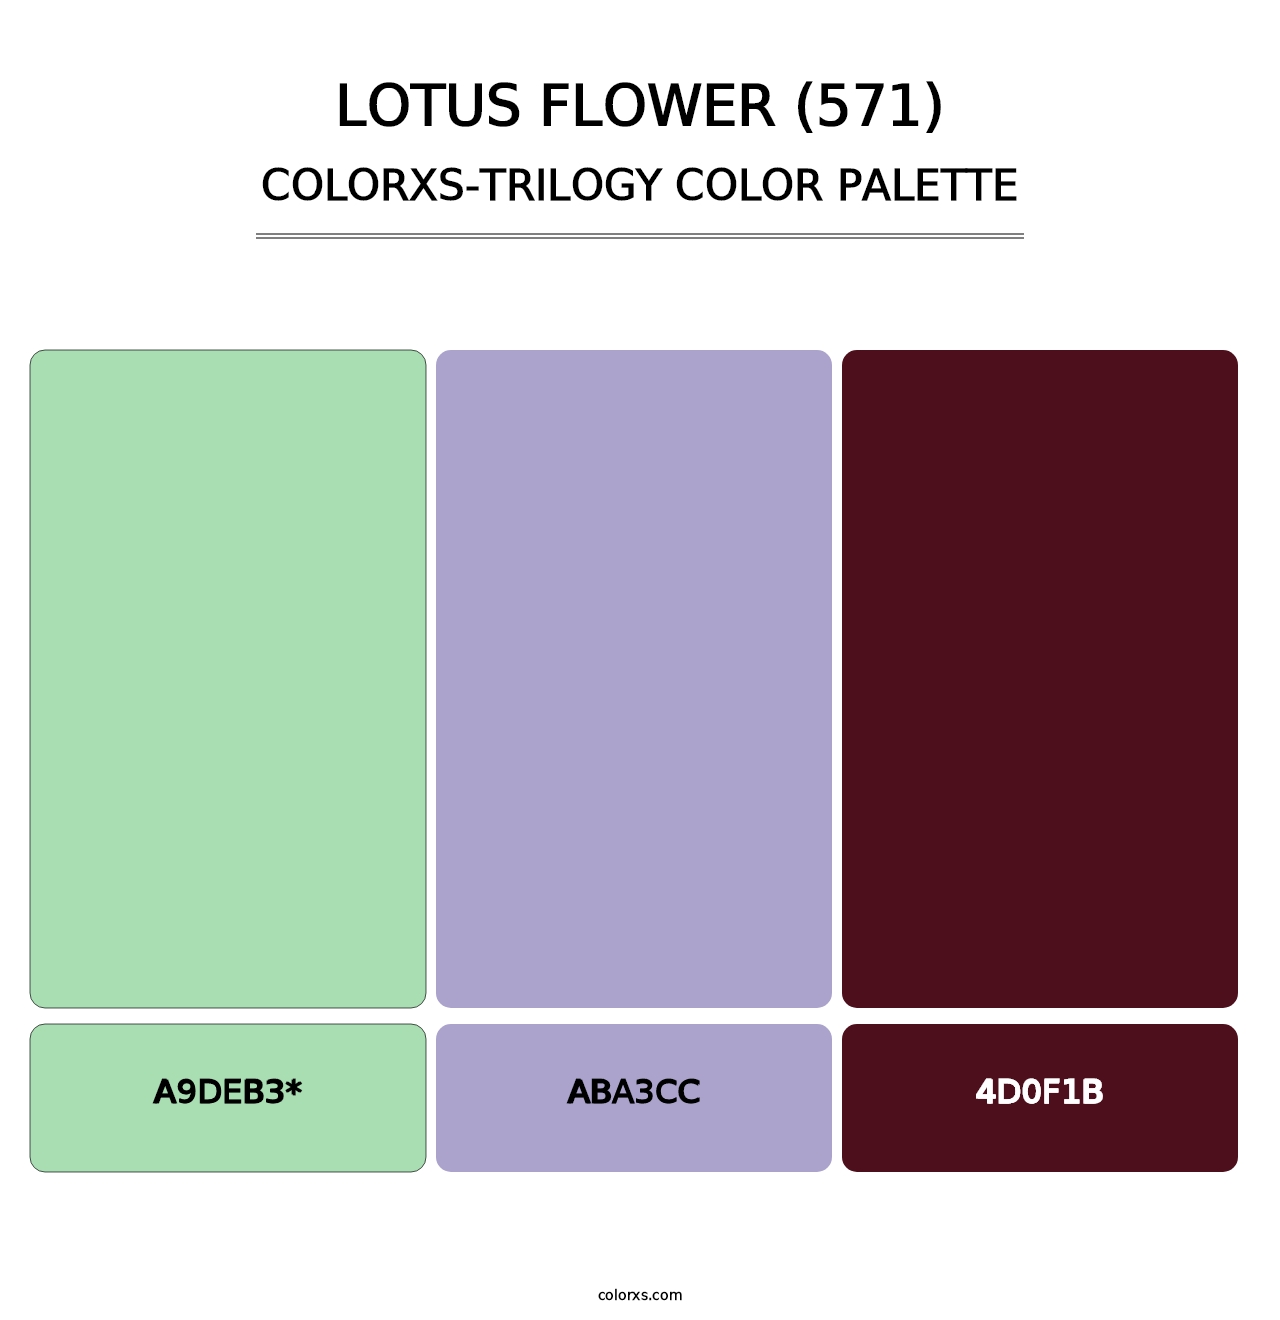 Lotus Flower (571) - Colorxs Trilogy Palette